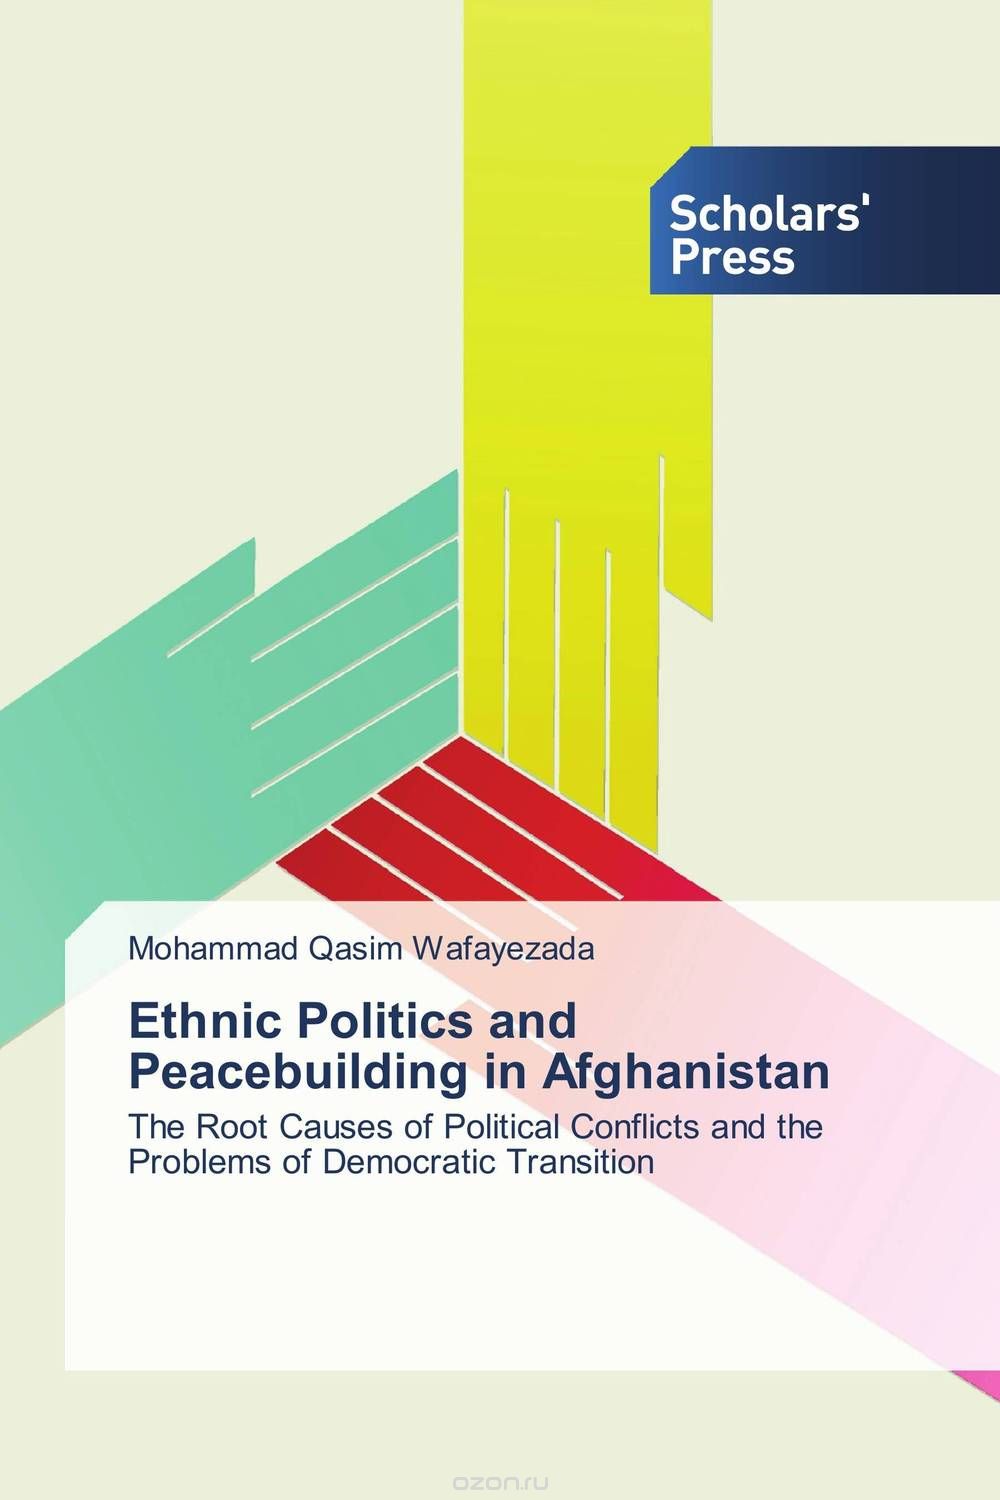 Скачать книгу "Ethnic Politics and Peacebuilding in Afghanistan"